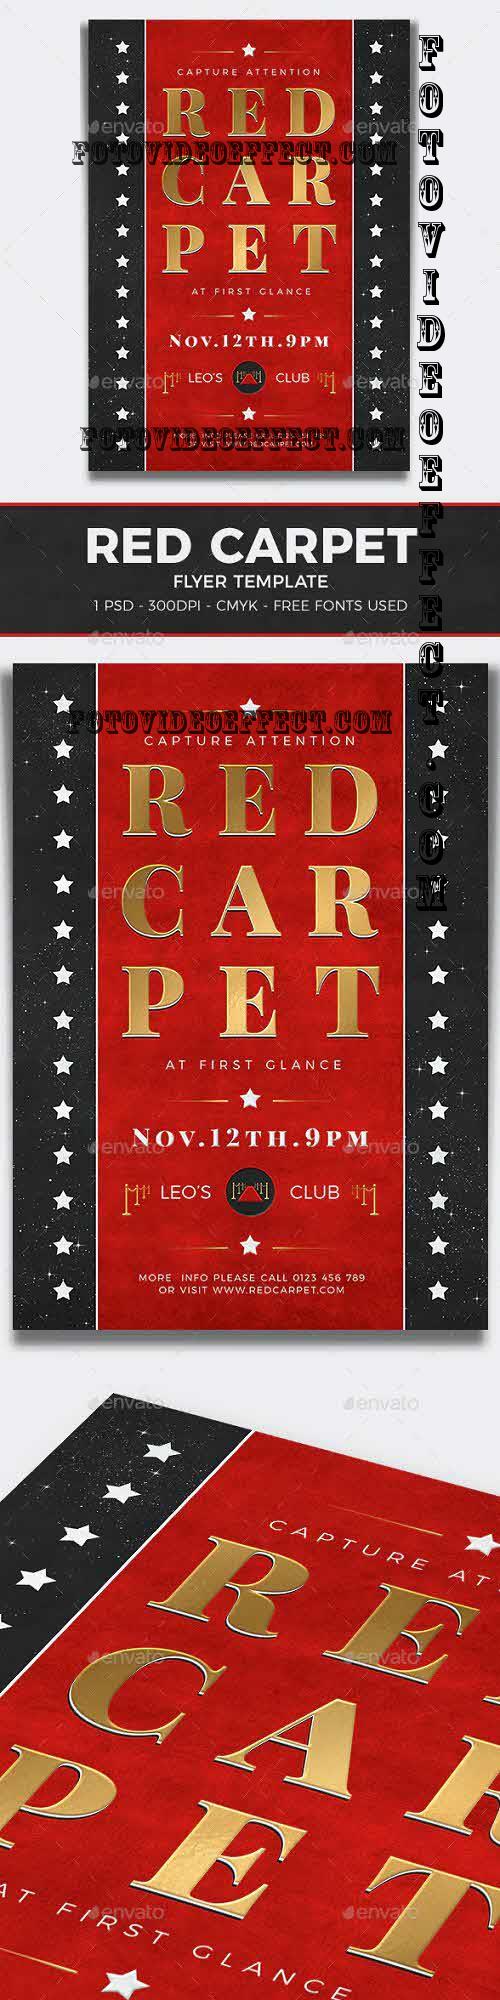 Red Carpet Flyer Template V3 - 38761526 - 7396550